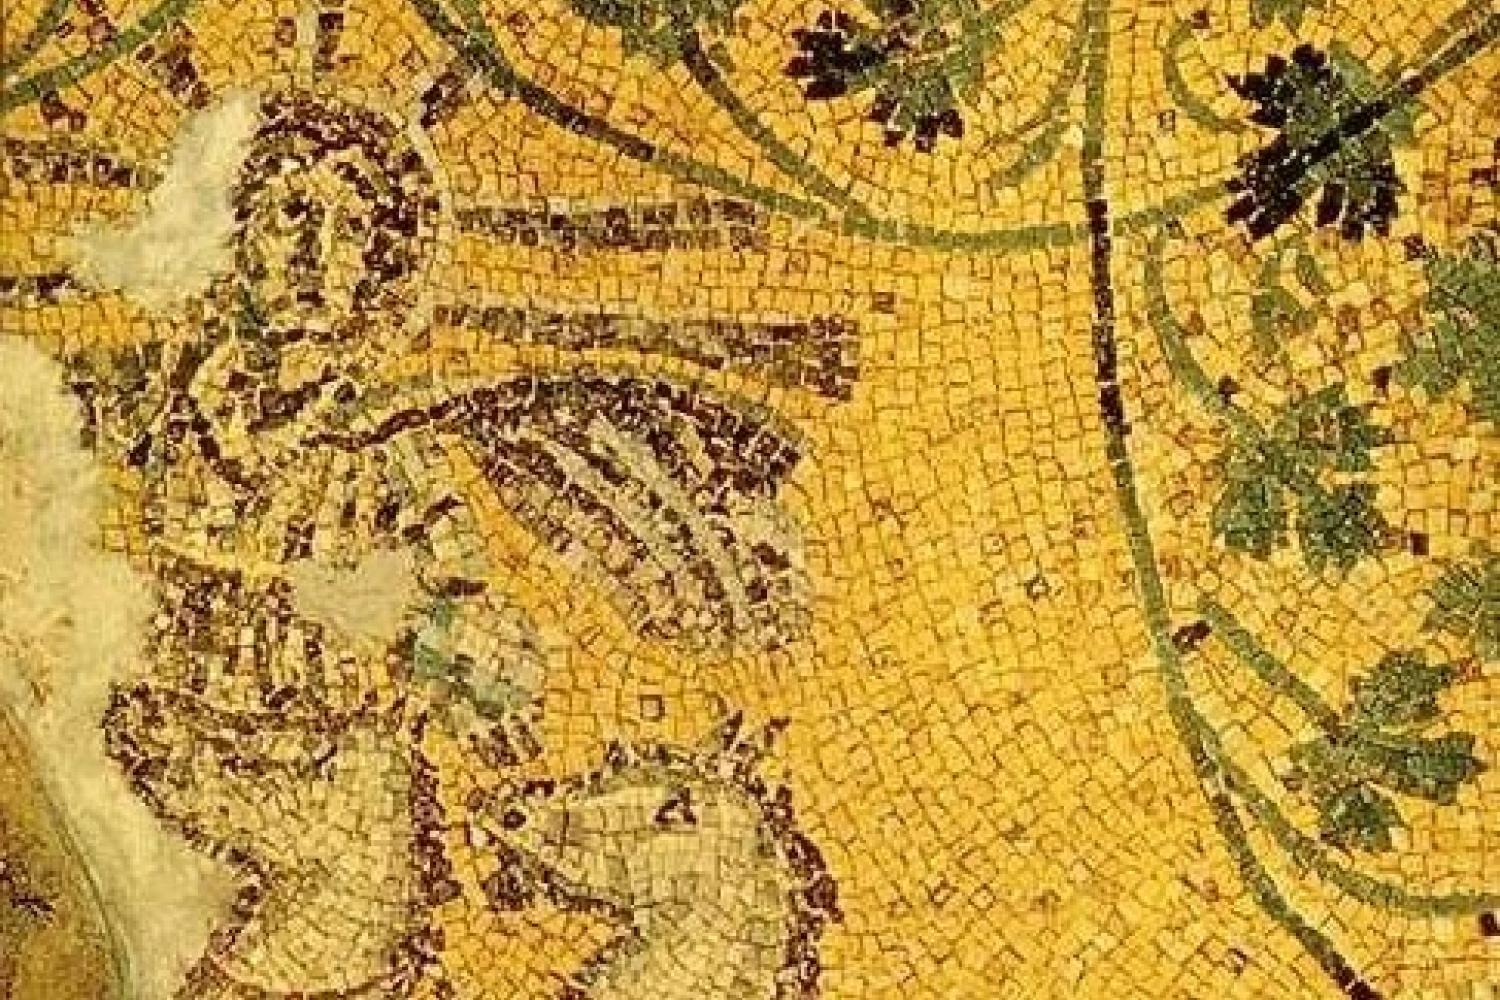 Sol Invictus Mosaic in the Vatican Necropolis, or "Scavi"